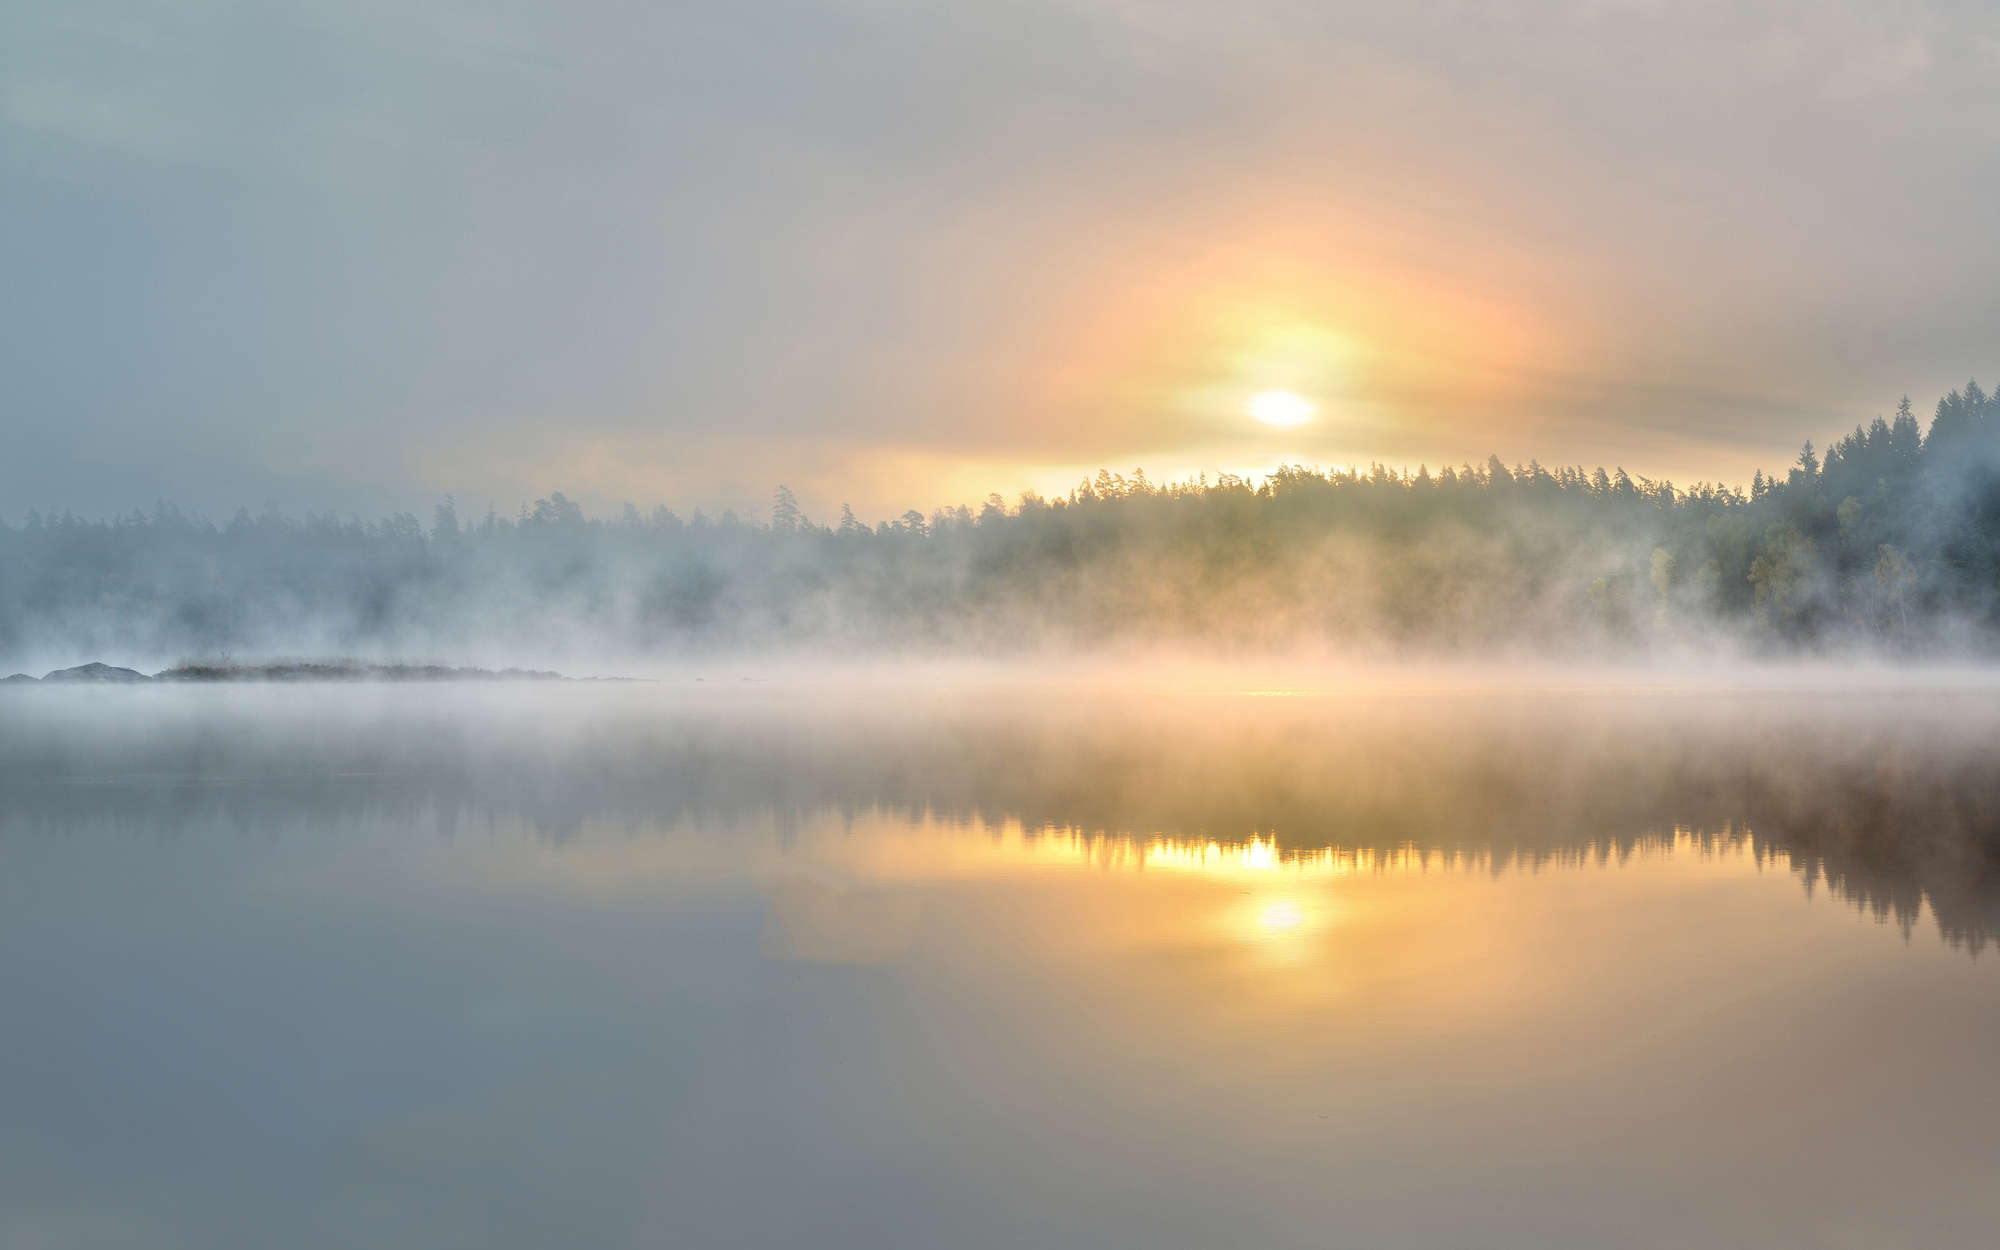             Natur Fototapete nebeliger See auf Premium Glattvlies
        